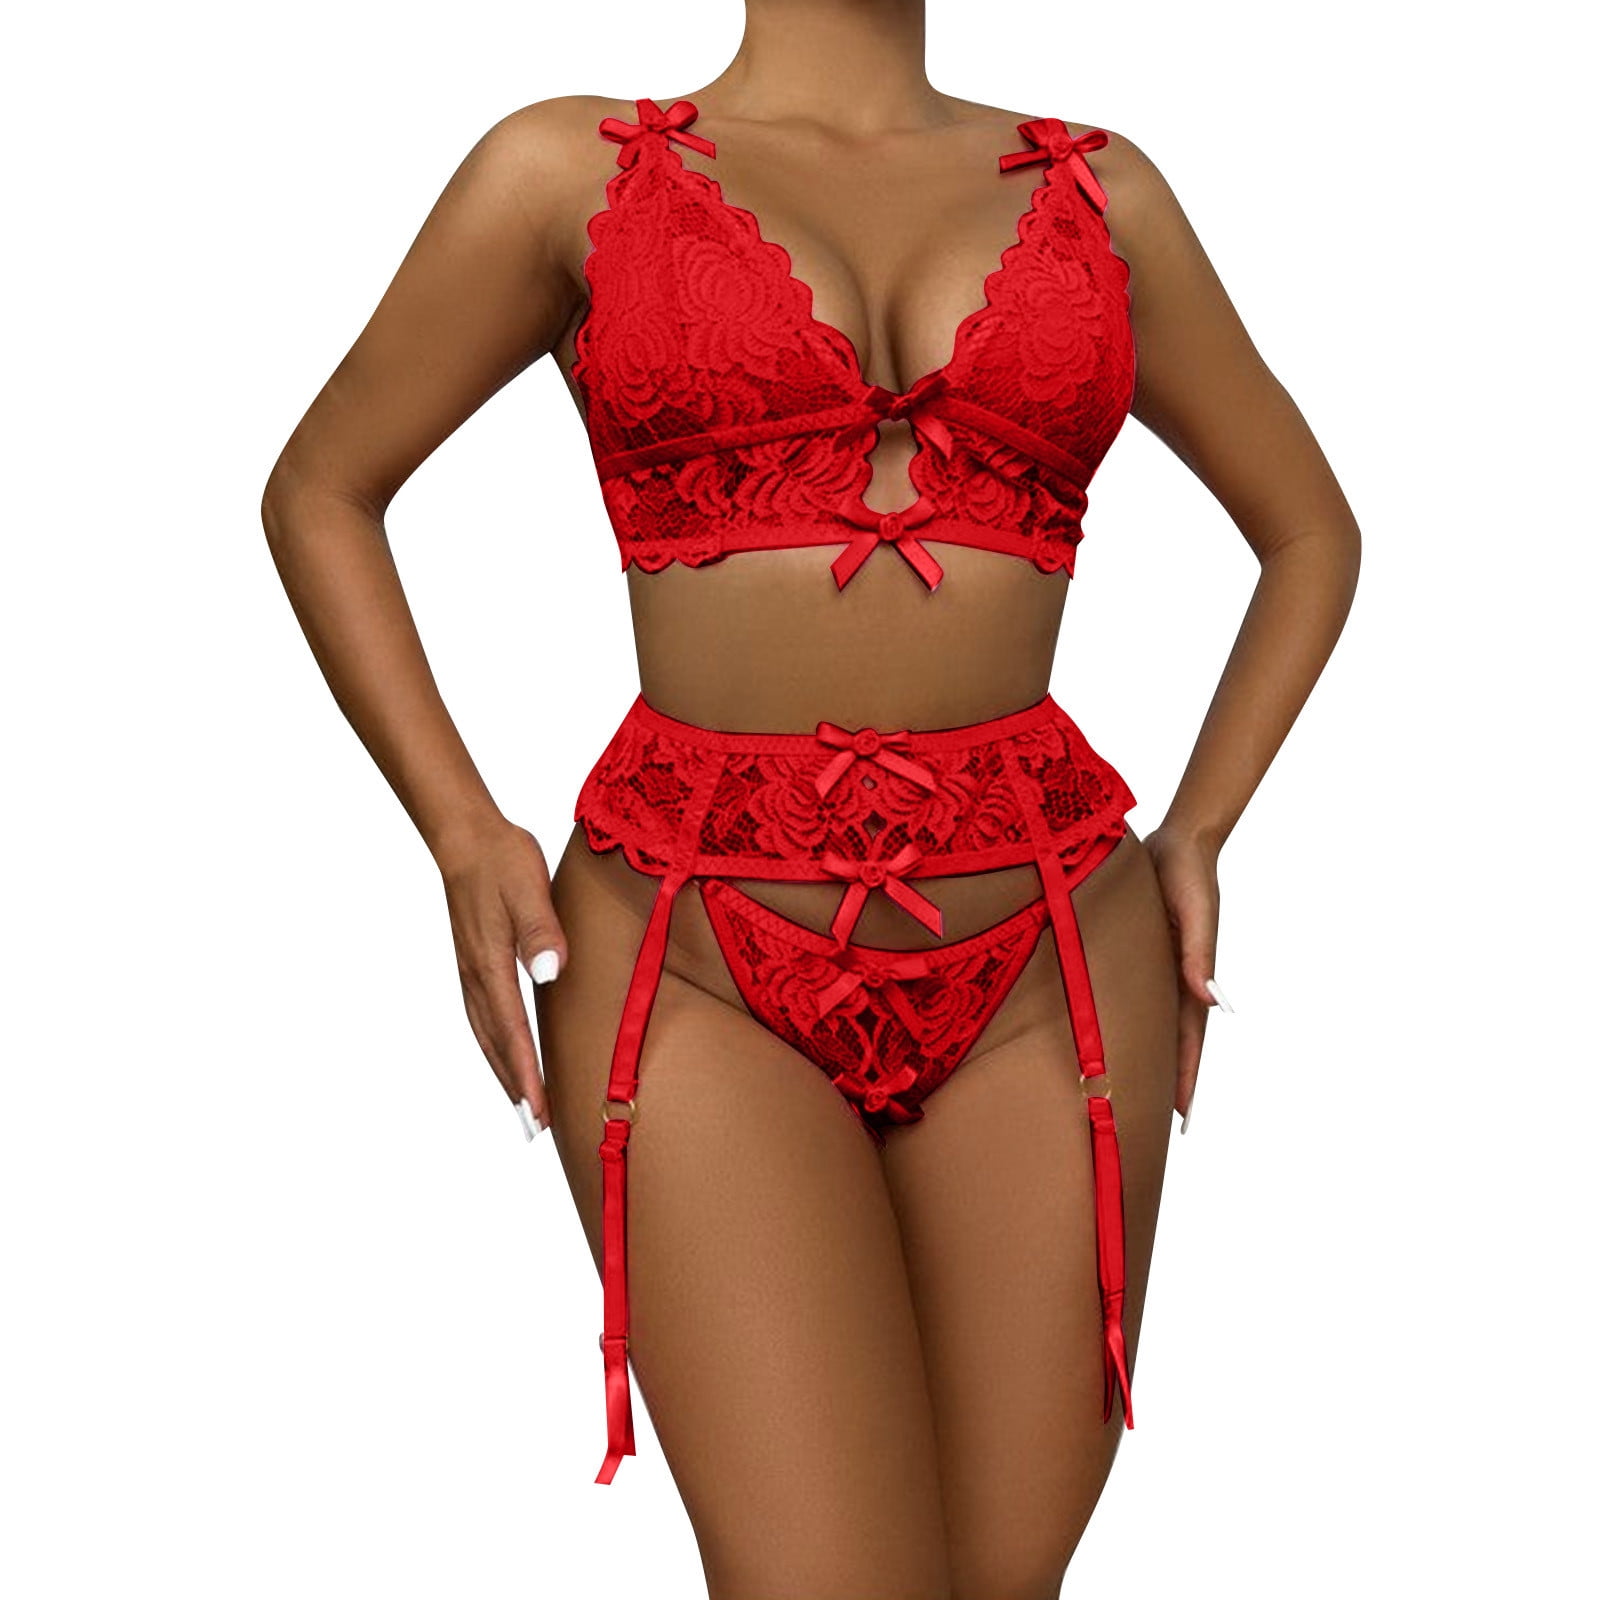 Hfyihgf Sexy Corset Garter Belt Lingerie Set for Women 3 Piece Exotic Floral  Lace Bustier Bra with Panties Babydoll Sleepwear(Red,XL) 